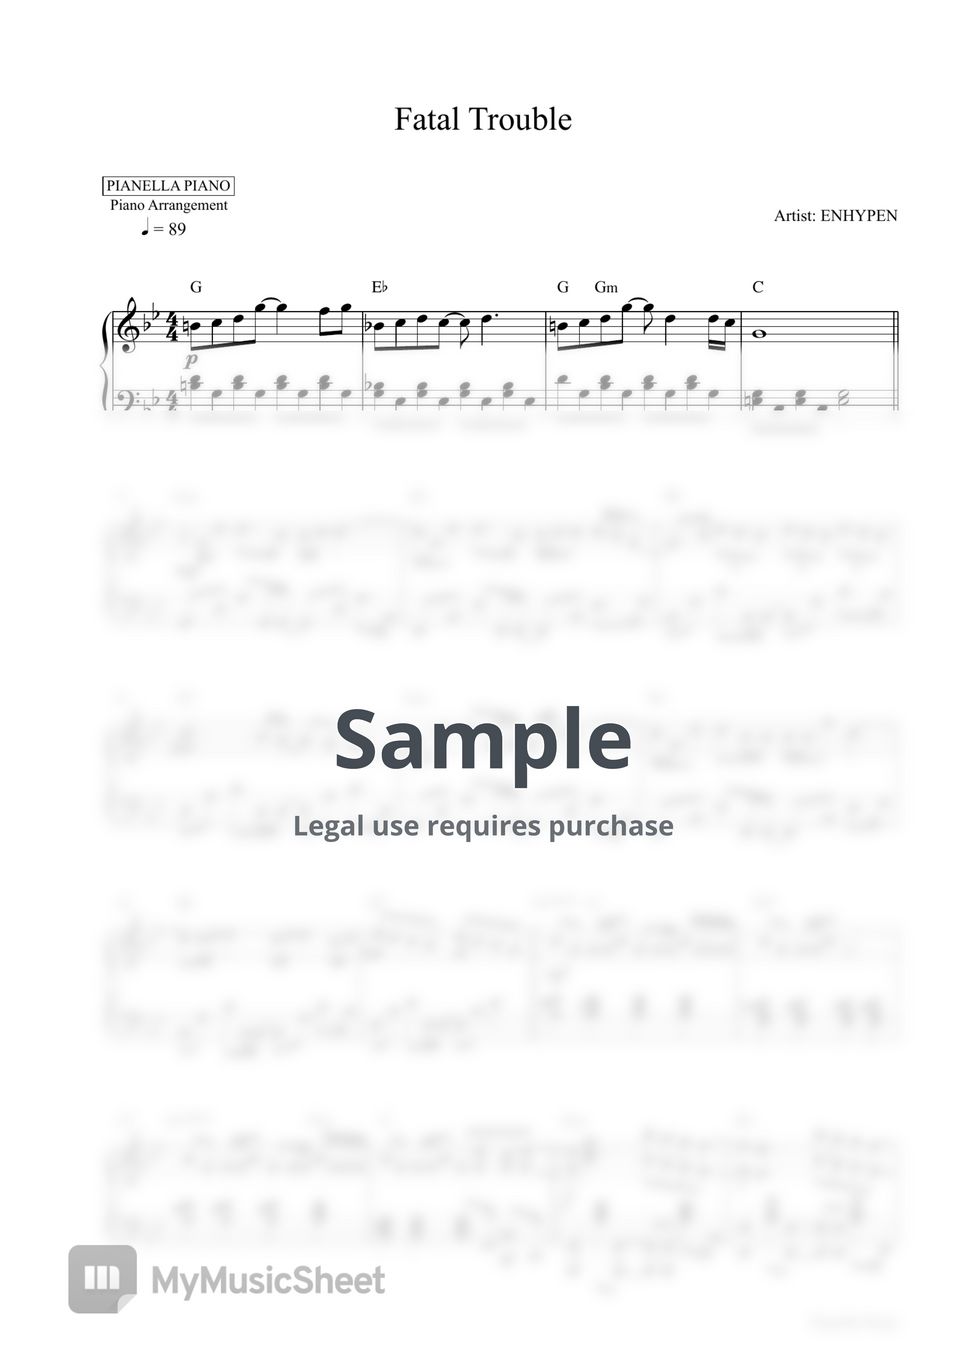 ENHYPEN - Fatal Trouble (Piano Sheet) by Pianella Piano